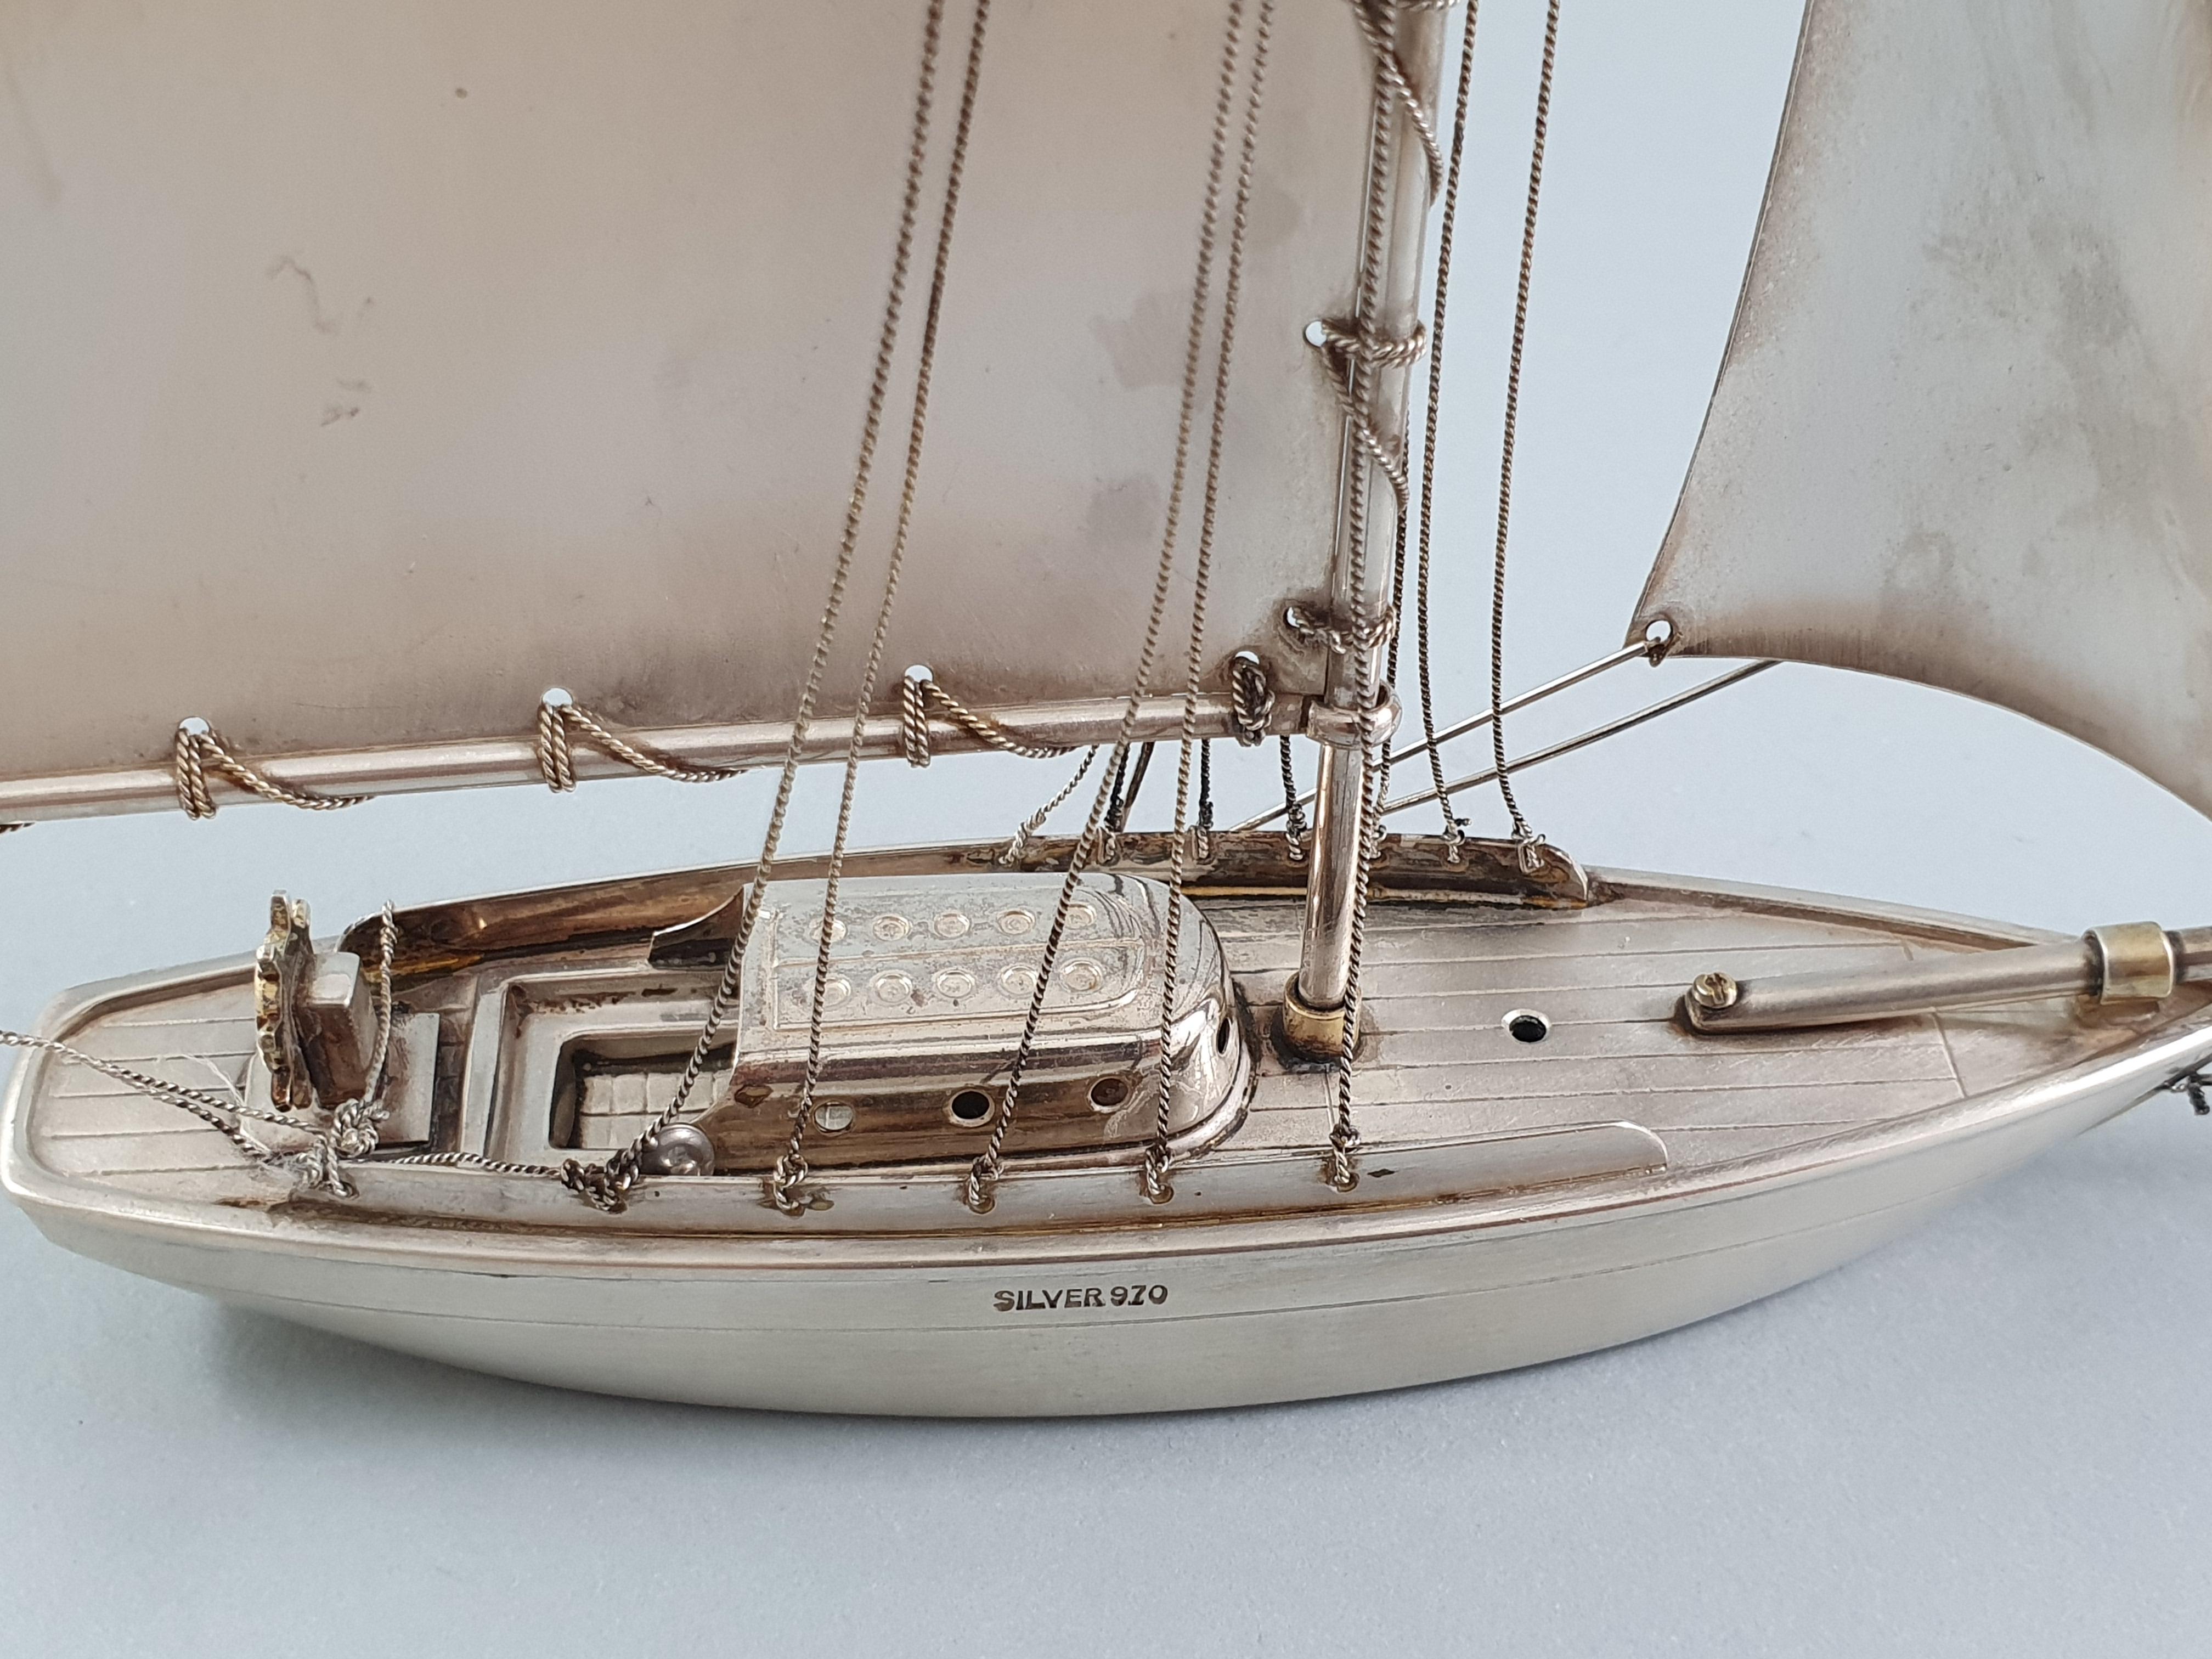 Sterling Silver Sailboat Boat 6